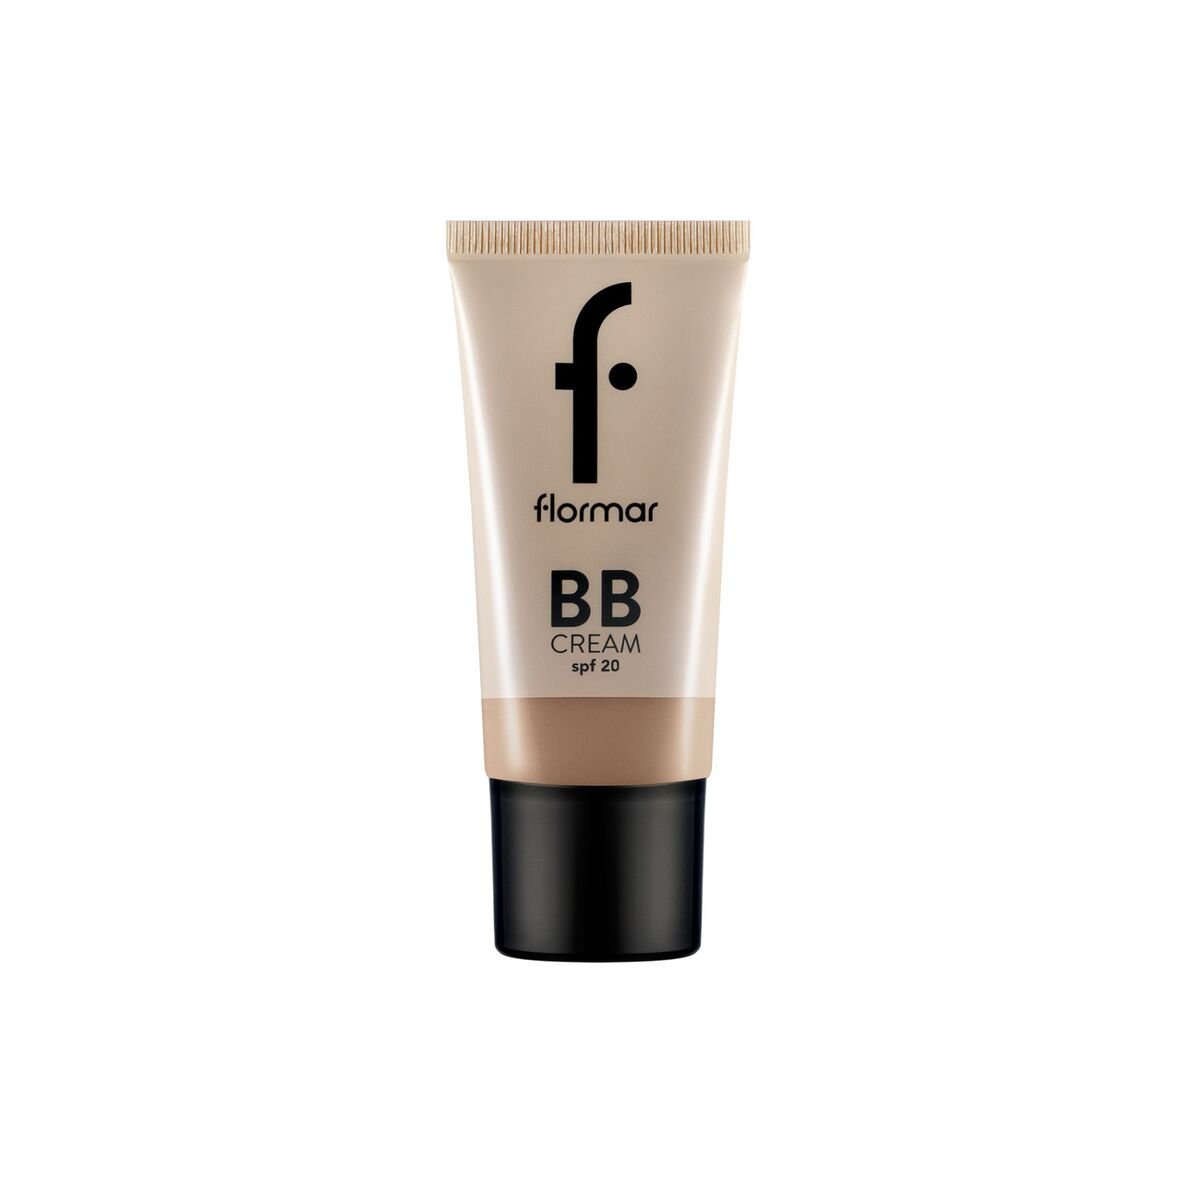 Flormar Prep for Perfection BB Cream, SPF 20 Online at Best Price, CC-Cream